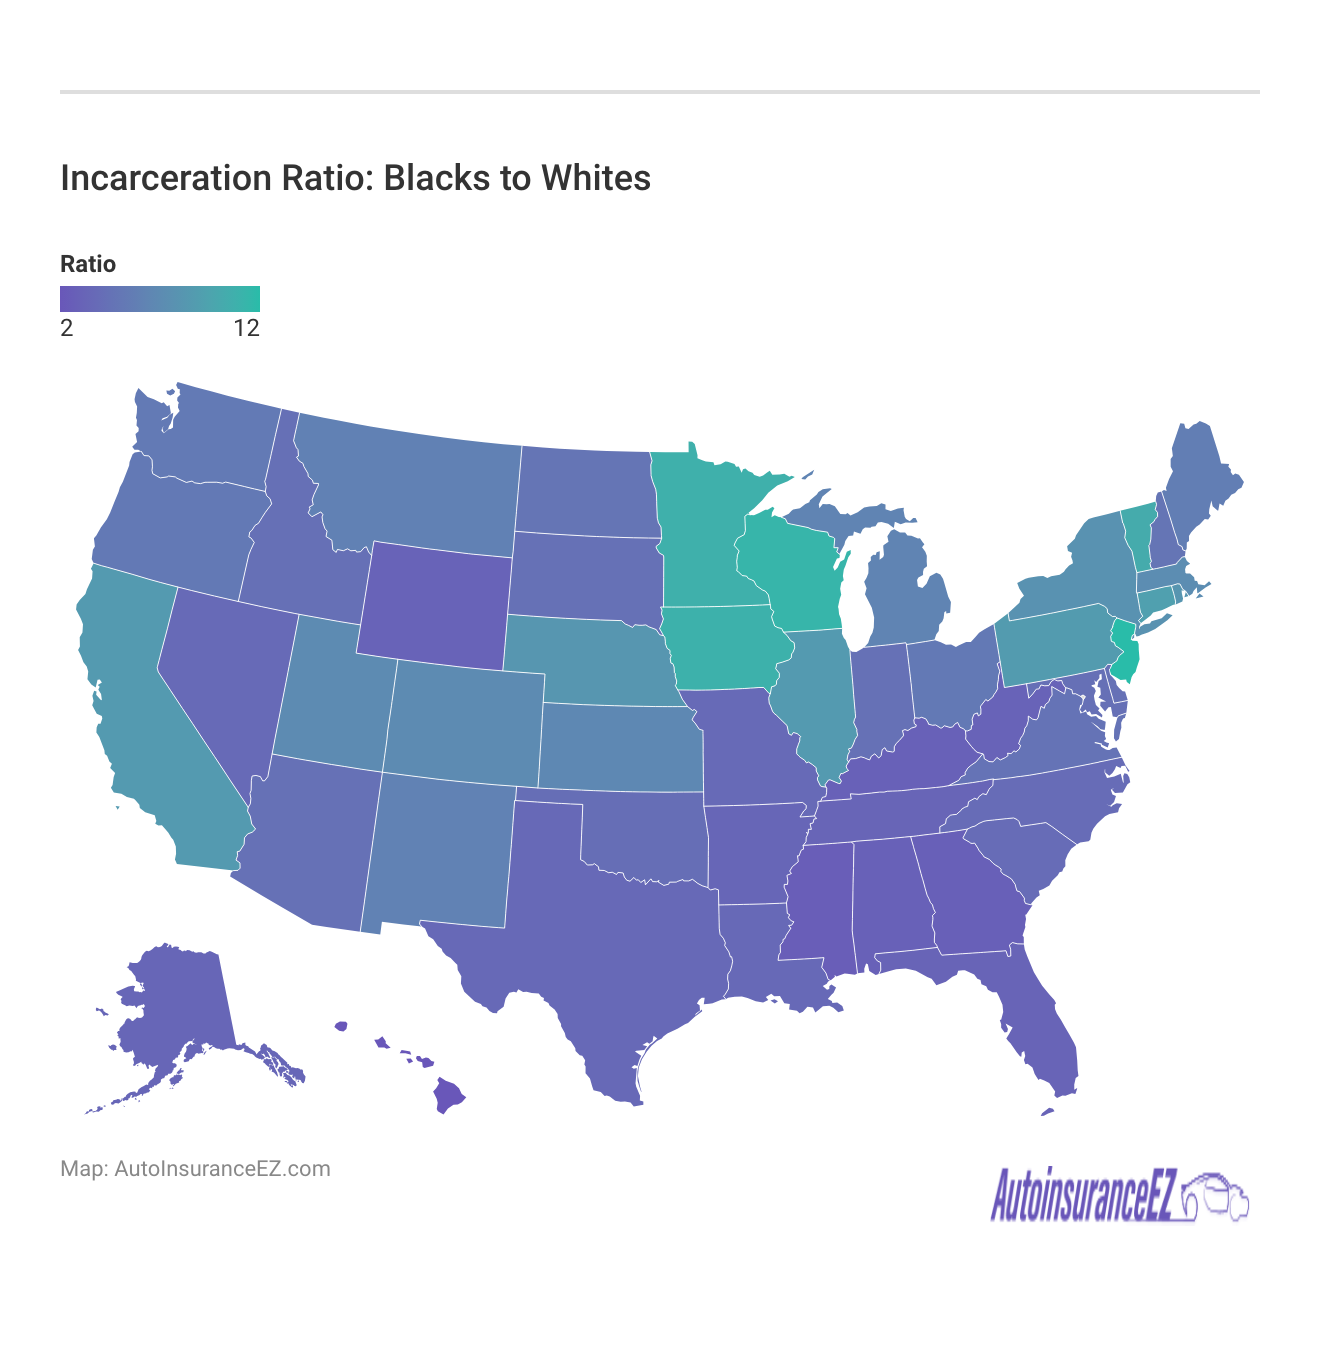 <h3>Incarceration Ratio: Blacks to Whites</h3>